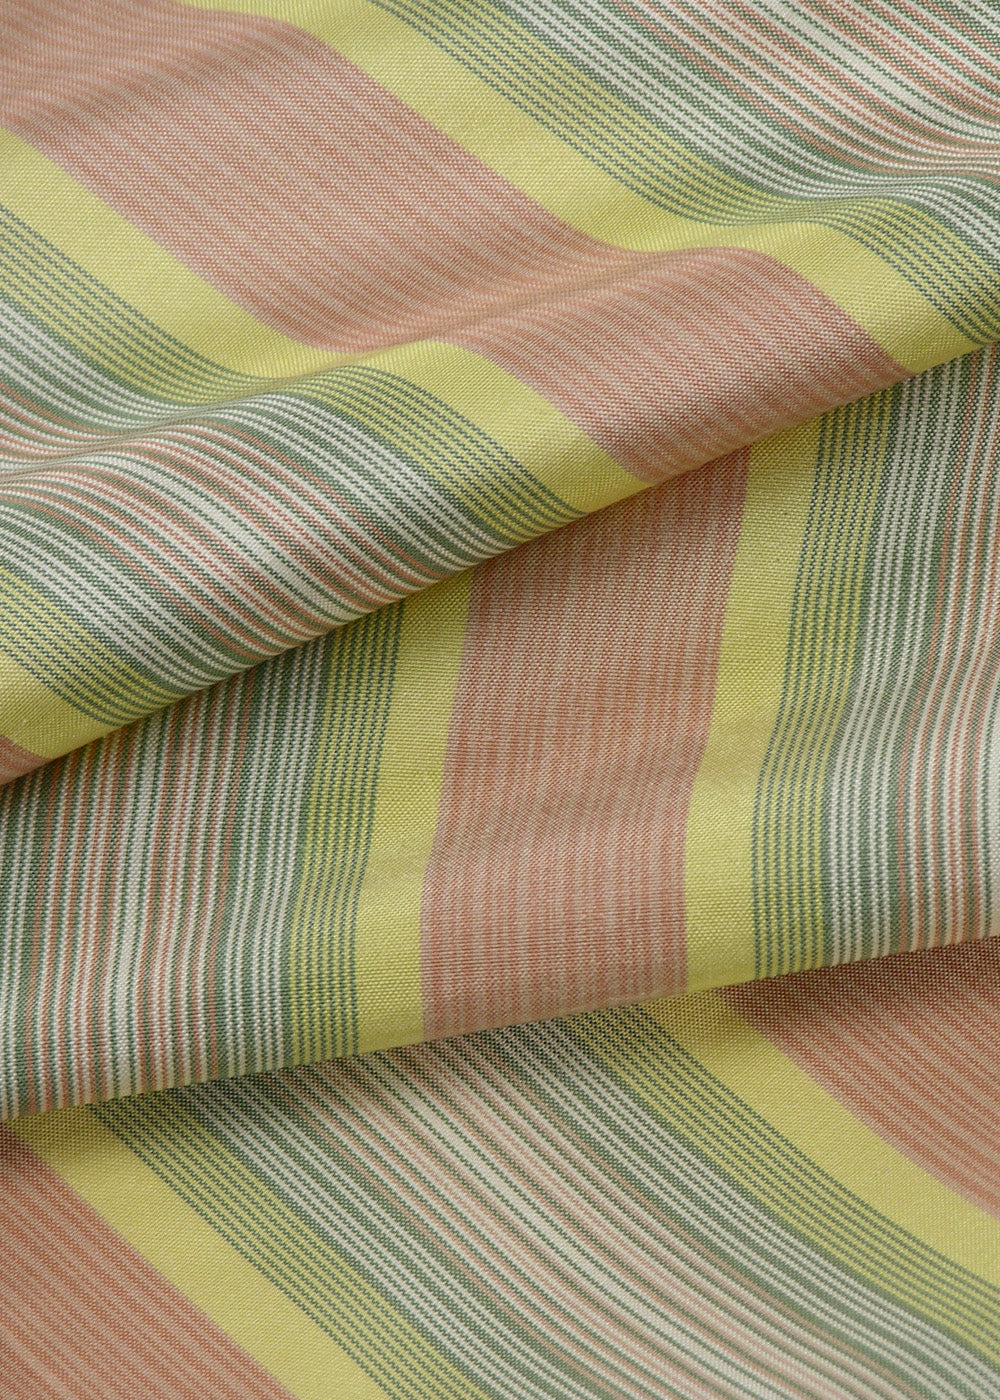 rainbow striped fabric softly draped over itself